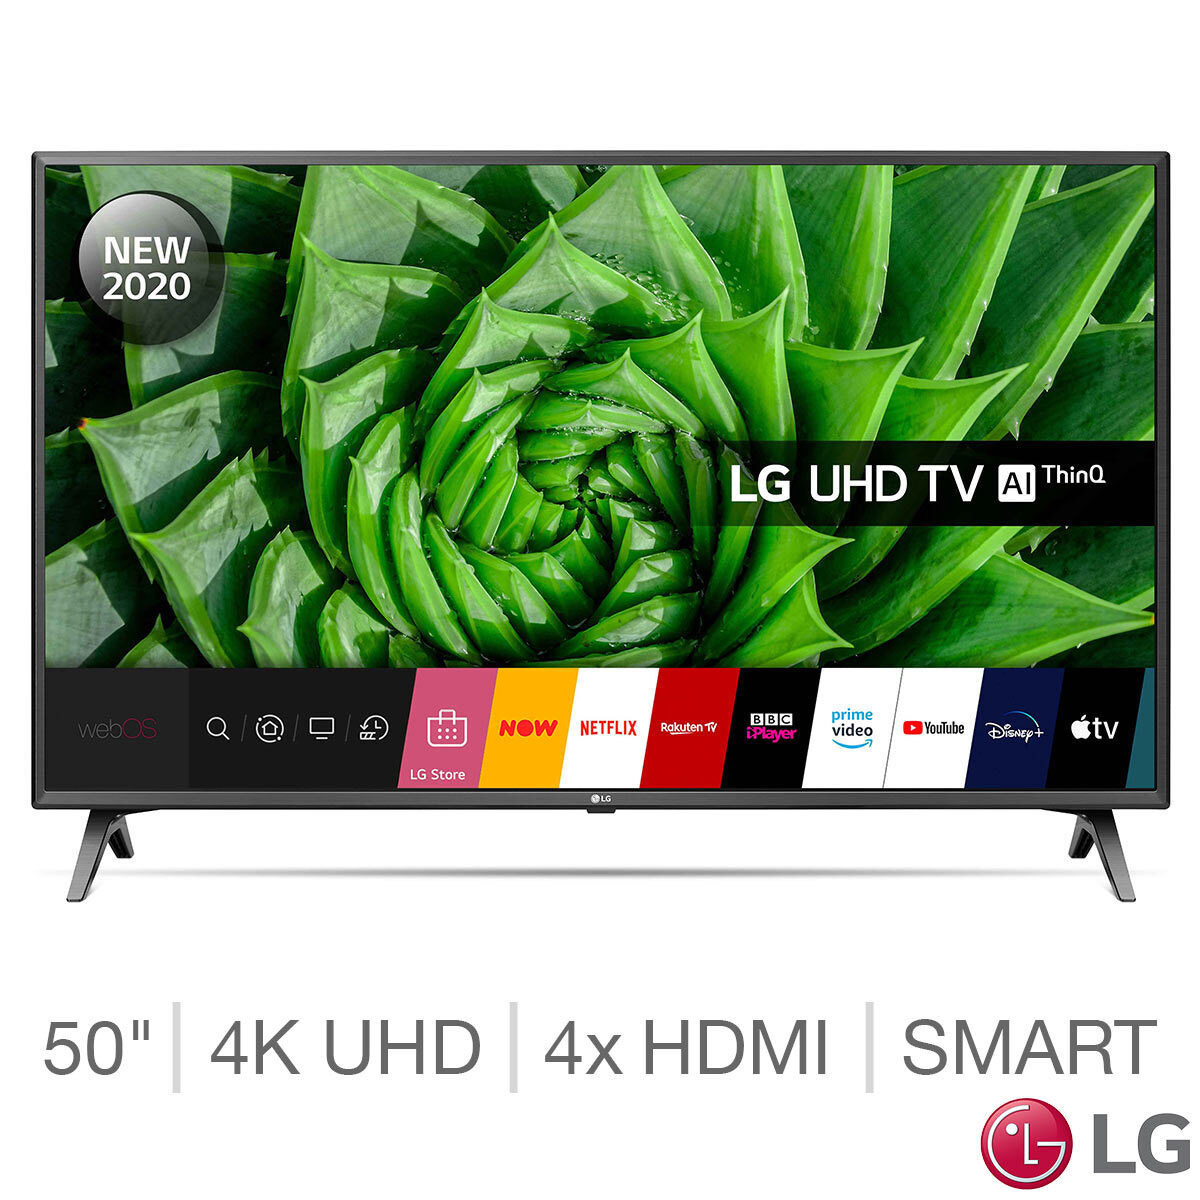 Lg 50un80 50 Inch 4k Ultra Hd Smart Tv Costco Uk